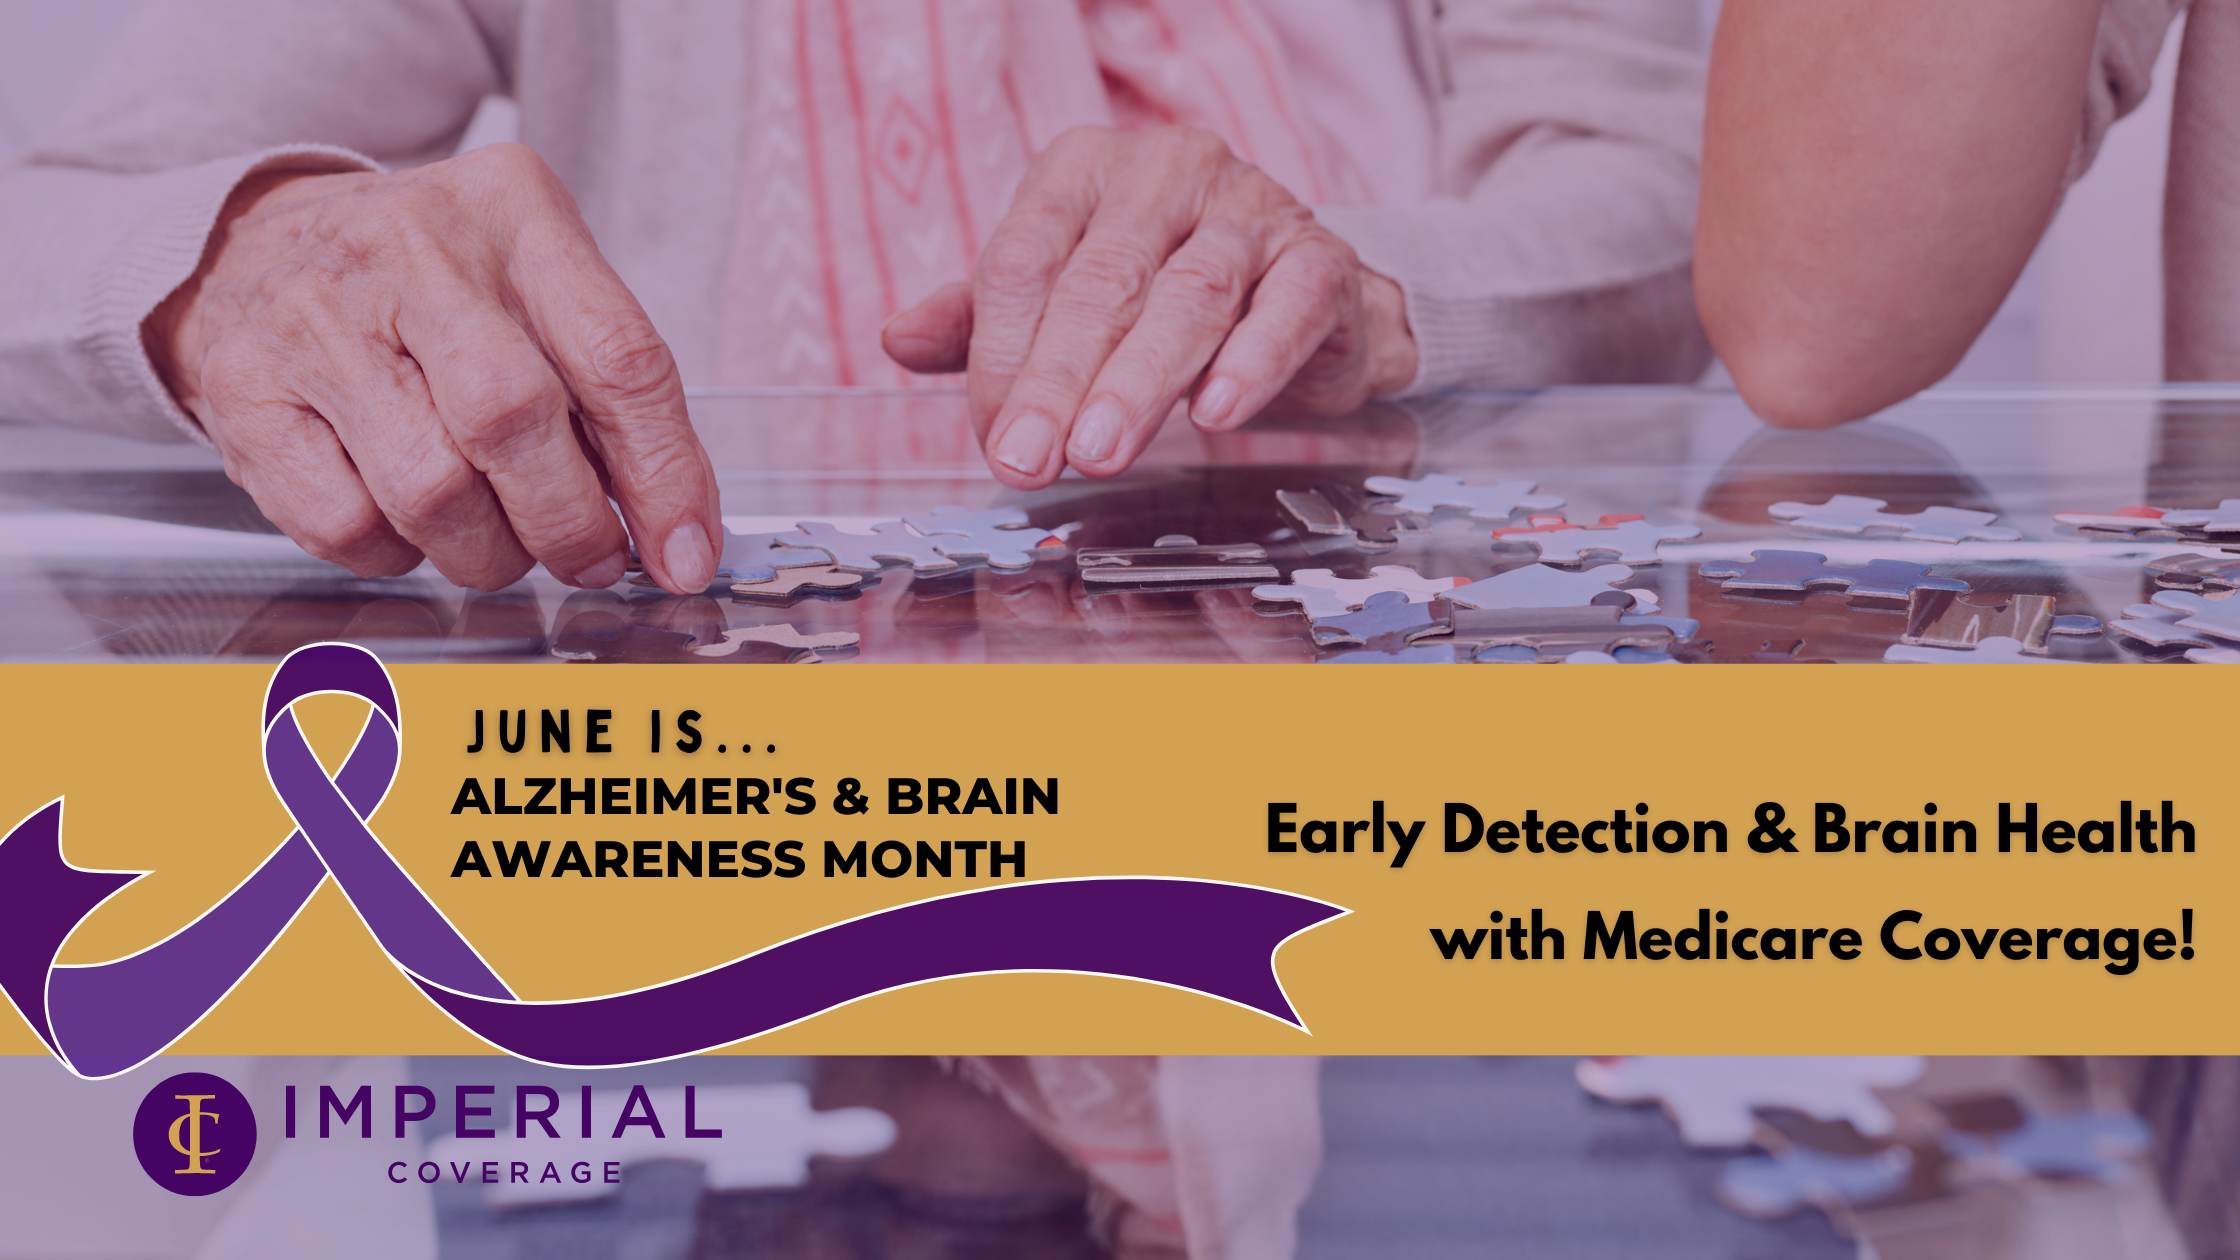 Alzheimer’s & Brain Awareness